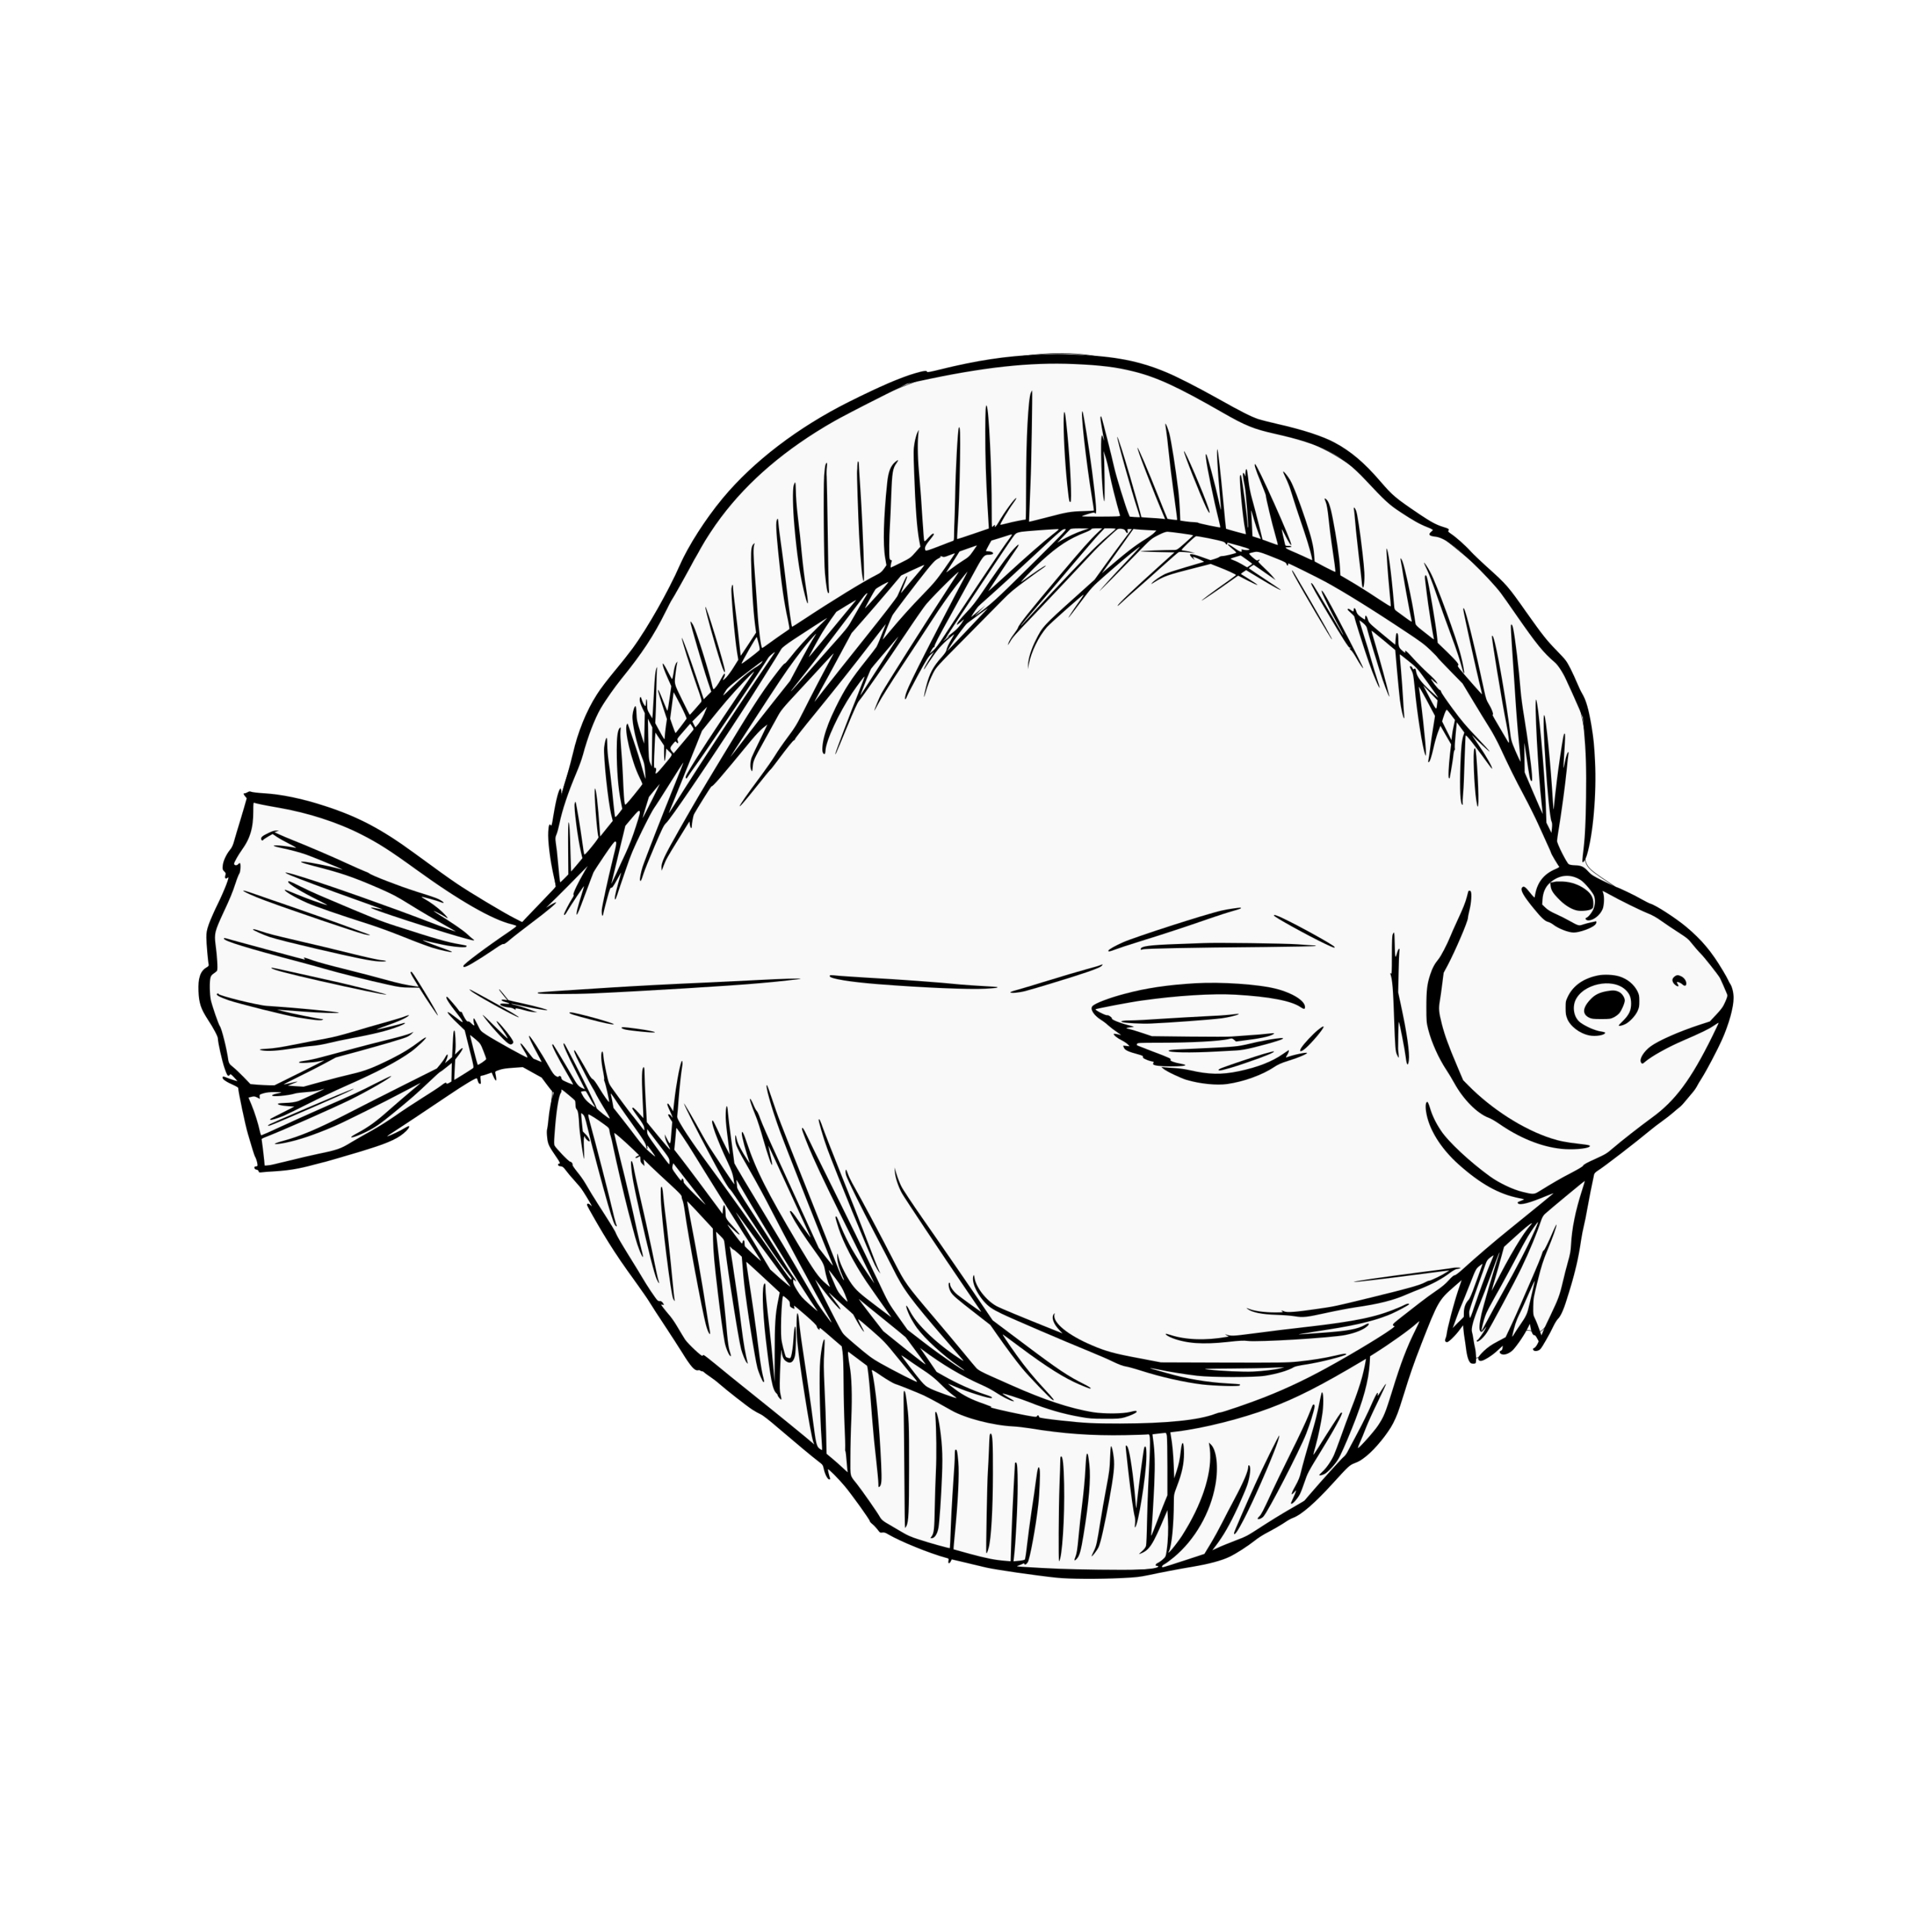 The Flounder logo